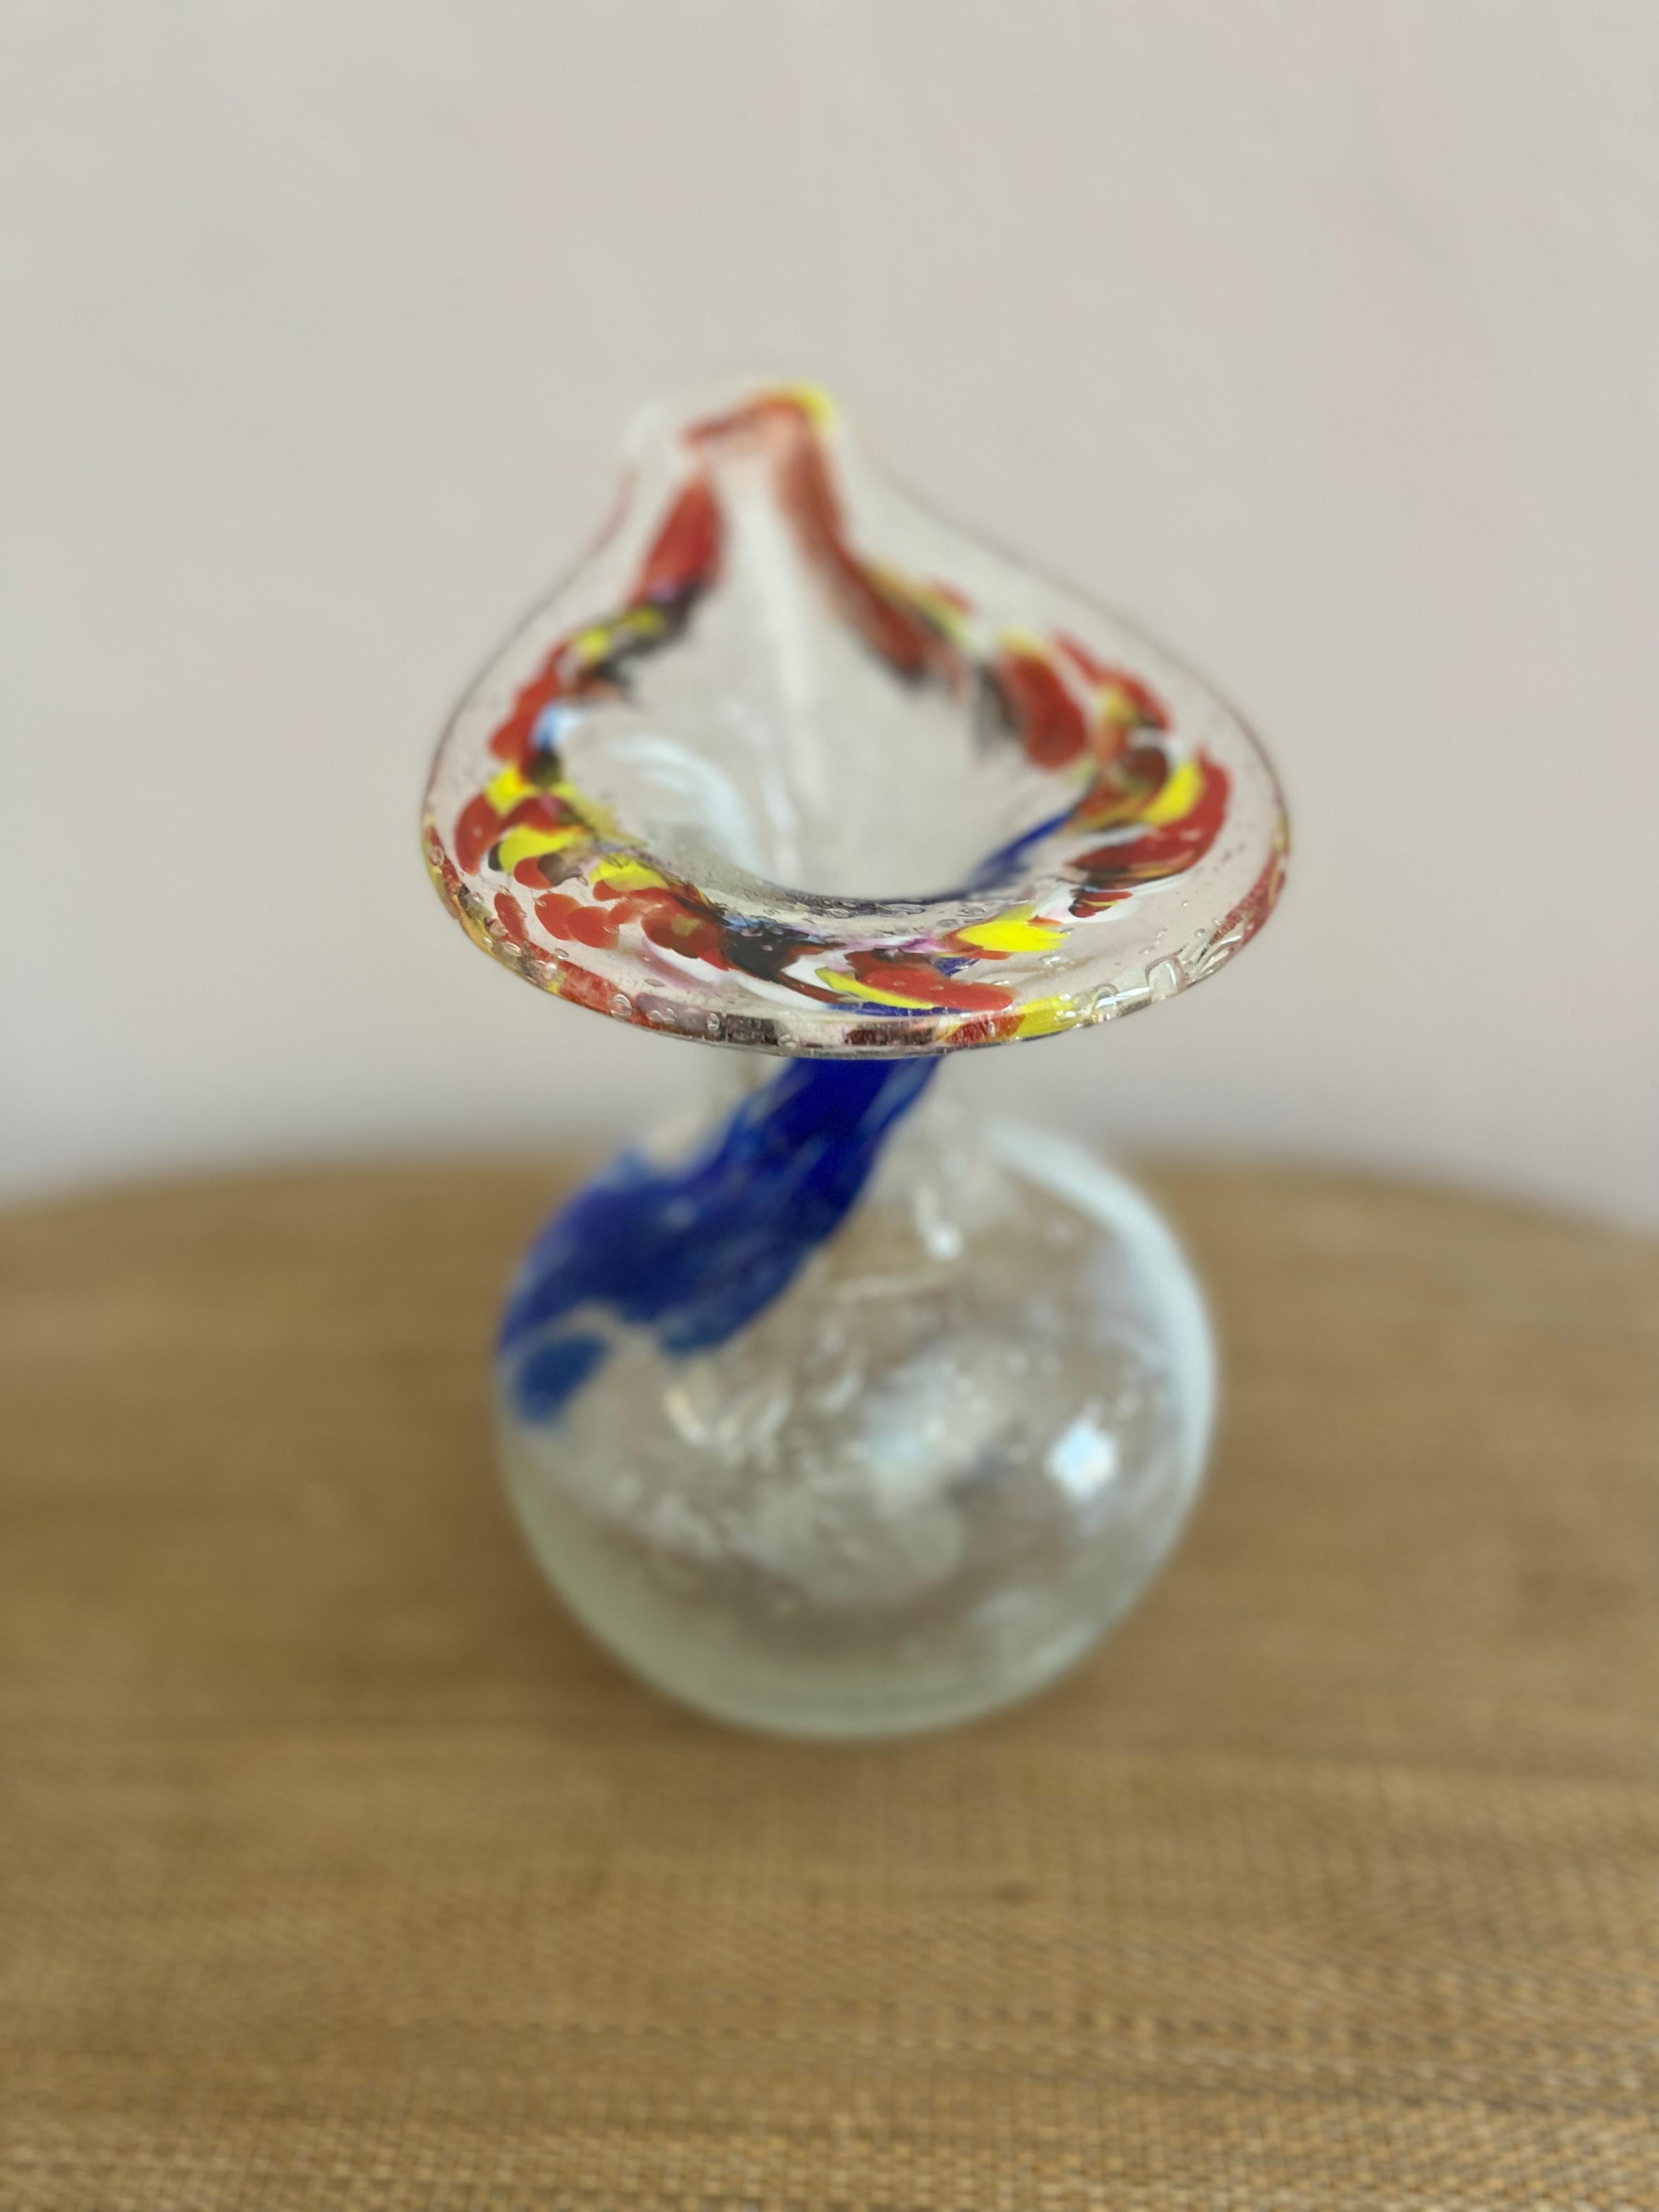 Organic Modern Swedish glass art vase in organic shapes For Sale